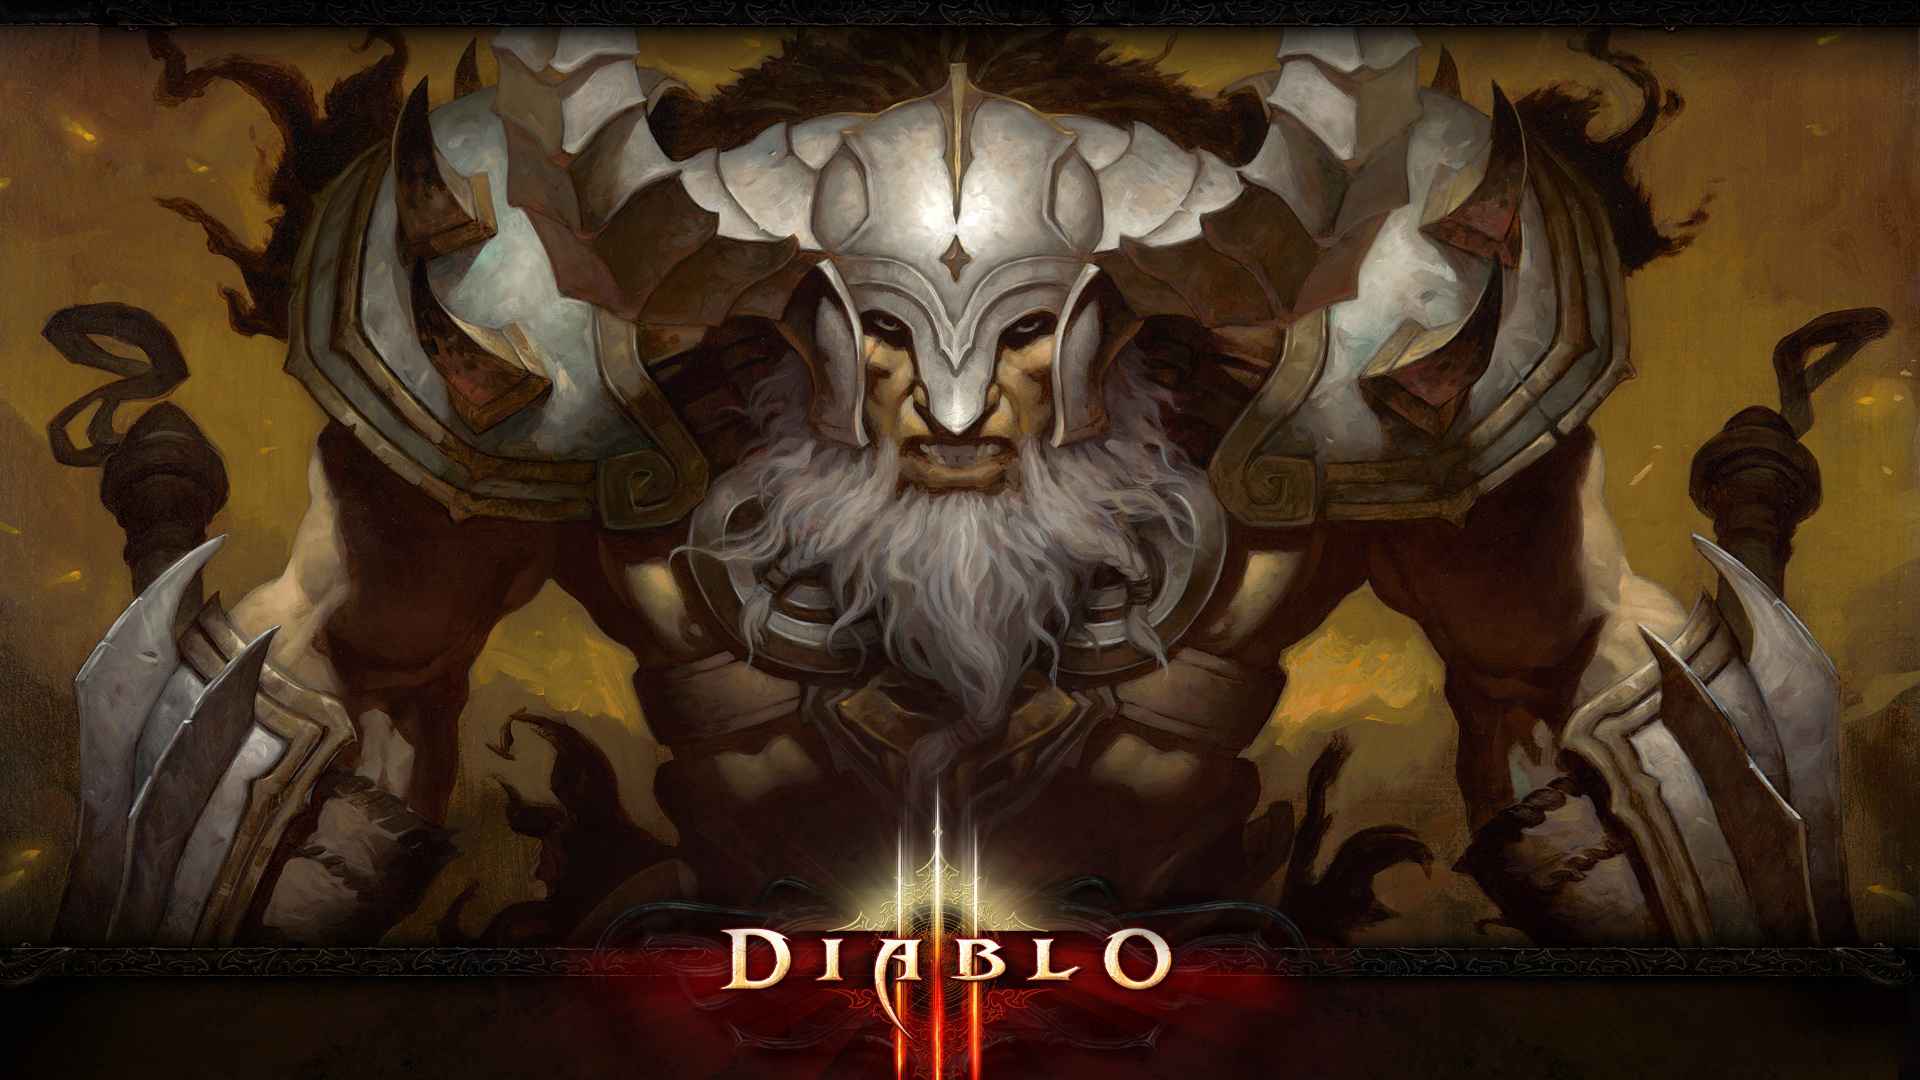 Baixe gratuitamente a imagem Diablo, Videogame, Diablo Iii, Bárbaro (Diablo Iii) na área de trabalho do seu PC